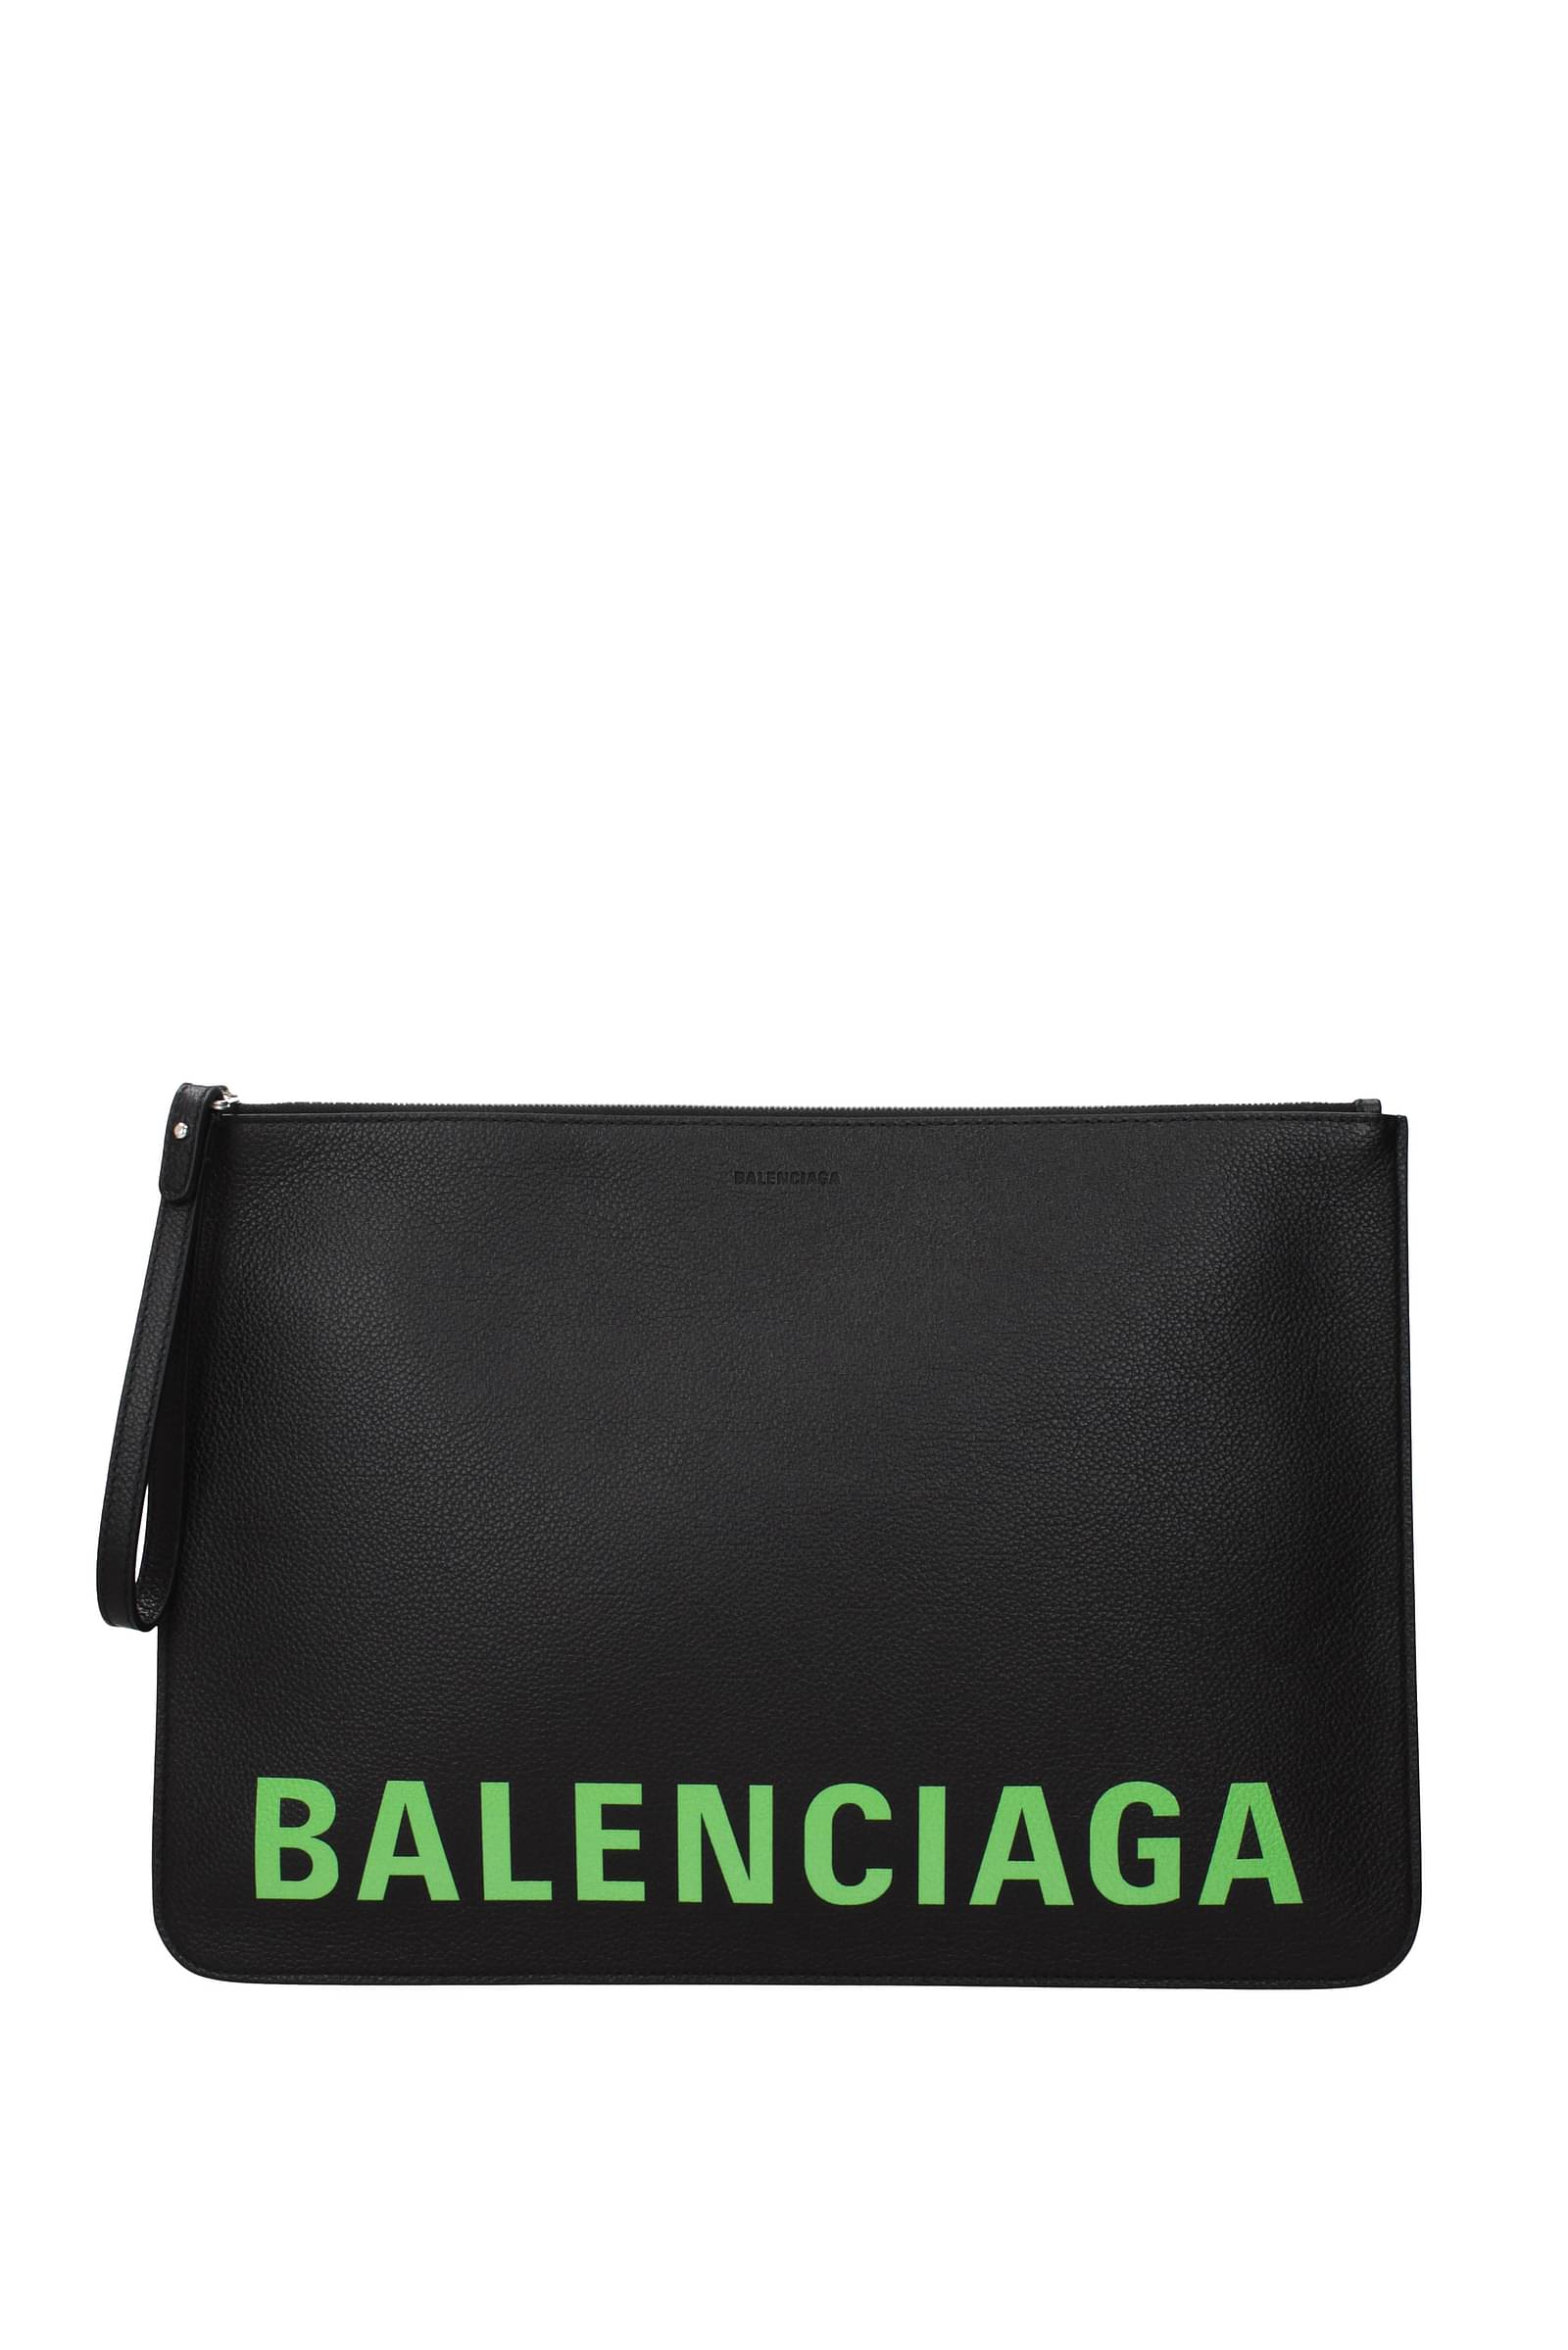 BALENCIAGA Hourglass Top Handle XS bag in leather  Black  Balenciaga  mini bag 5928331QJ4M online on GIGLIOCOM